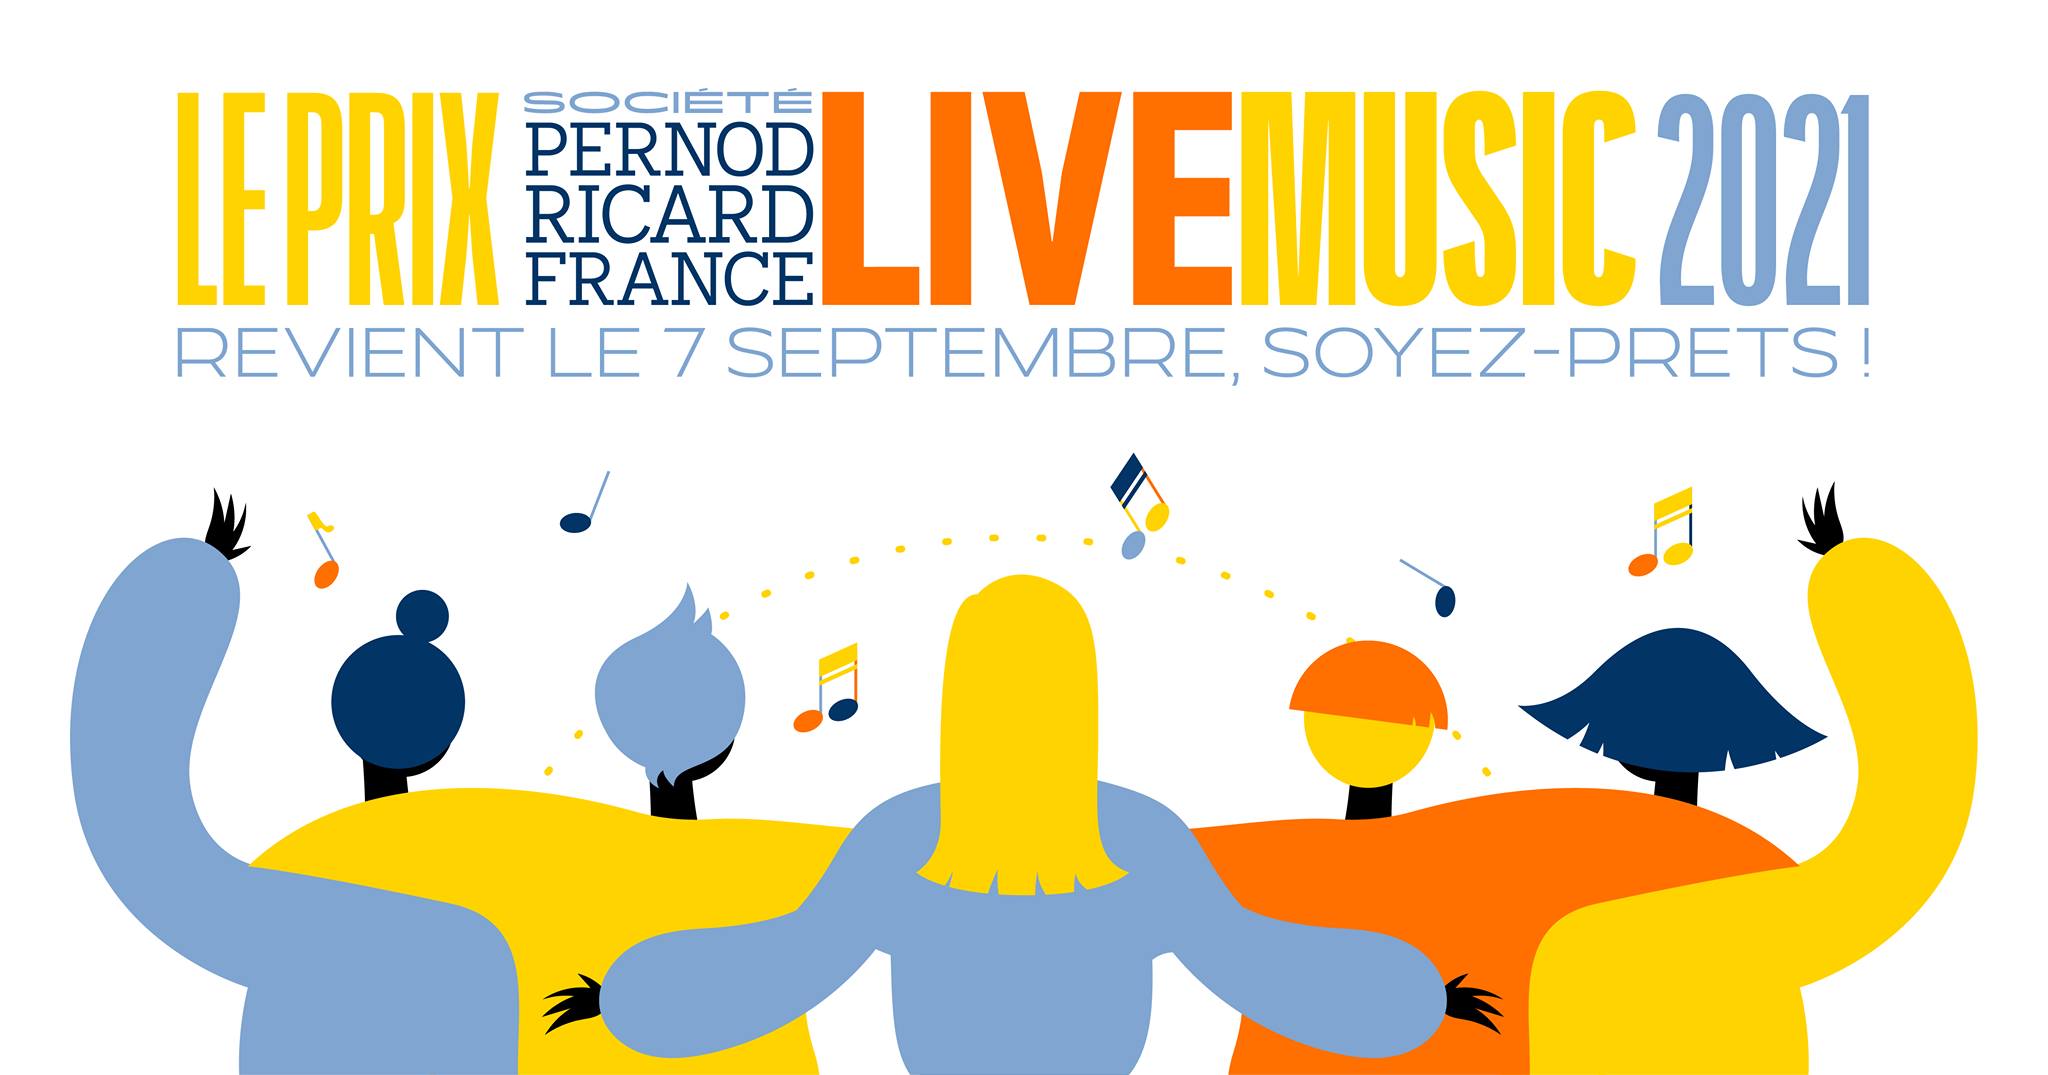 Prix Société Pernod Ricard France Live Music 2021